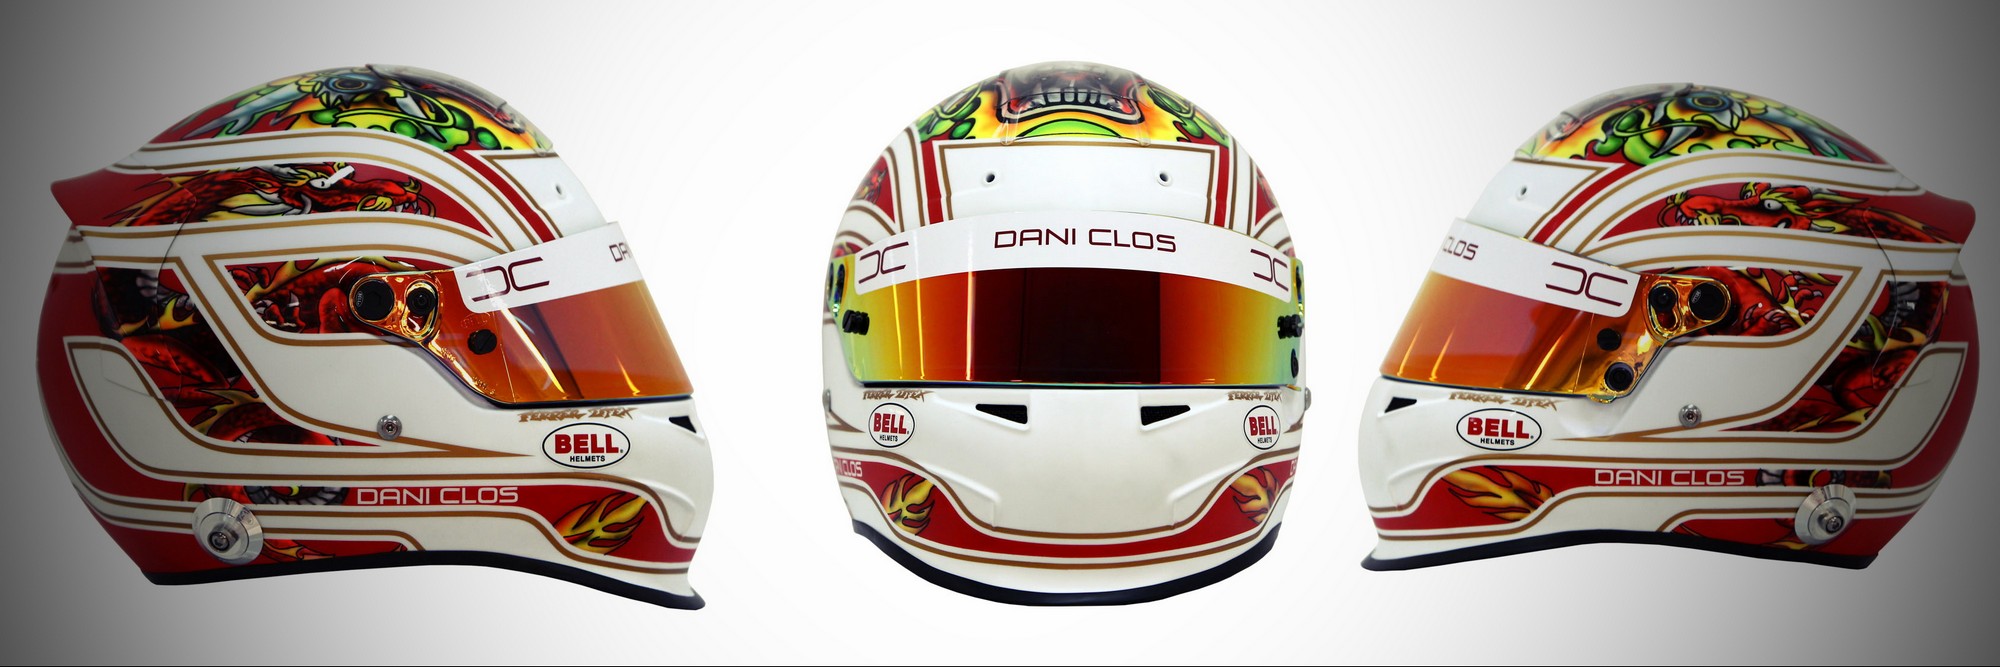 Шлем Дани Клоса на сезон 2012 года | 2012 helmet of Dani Clos